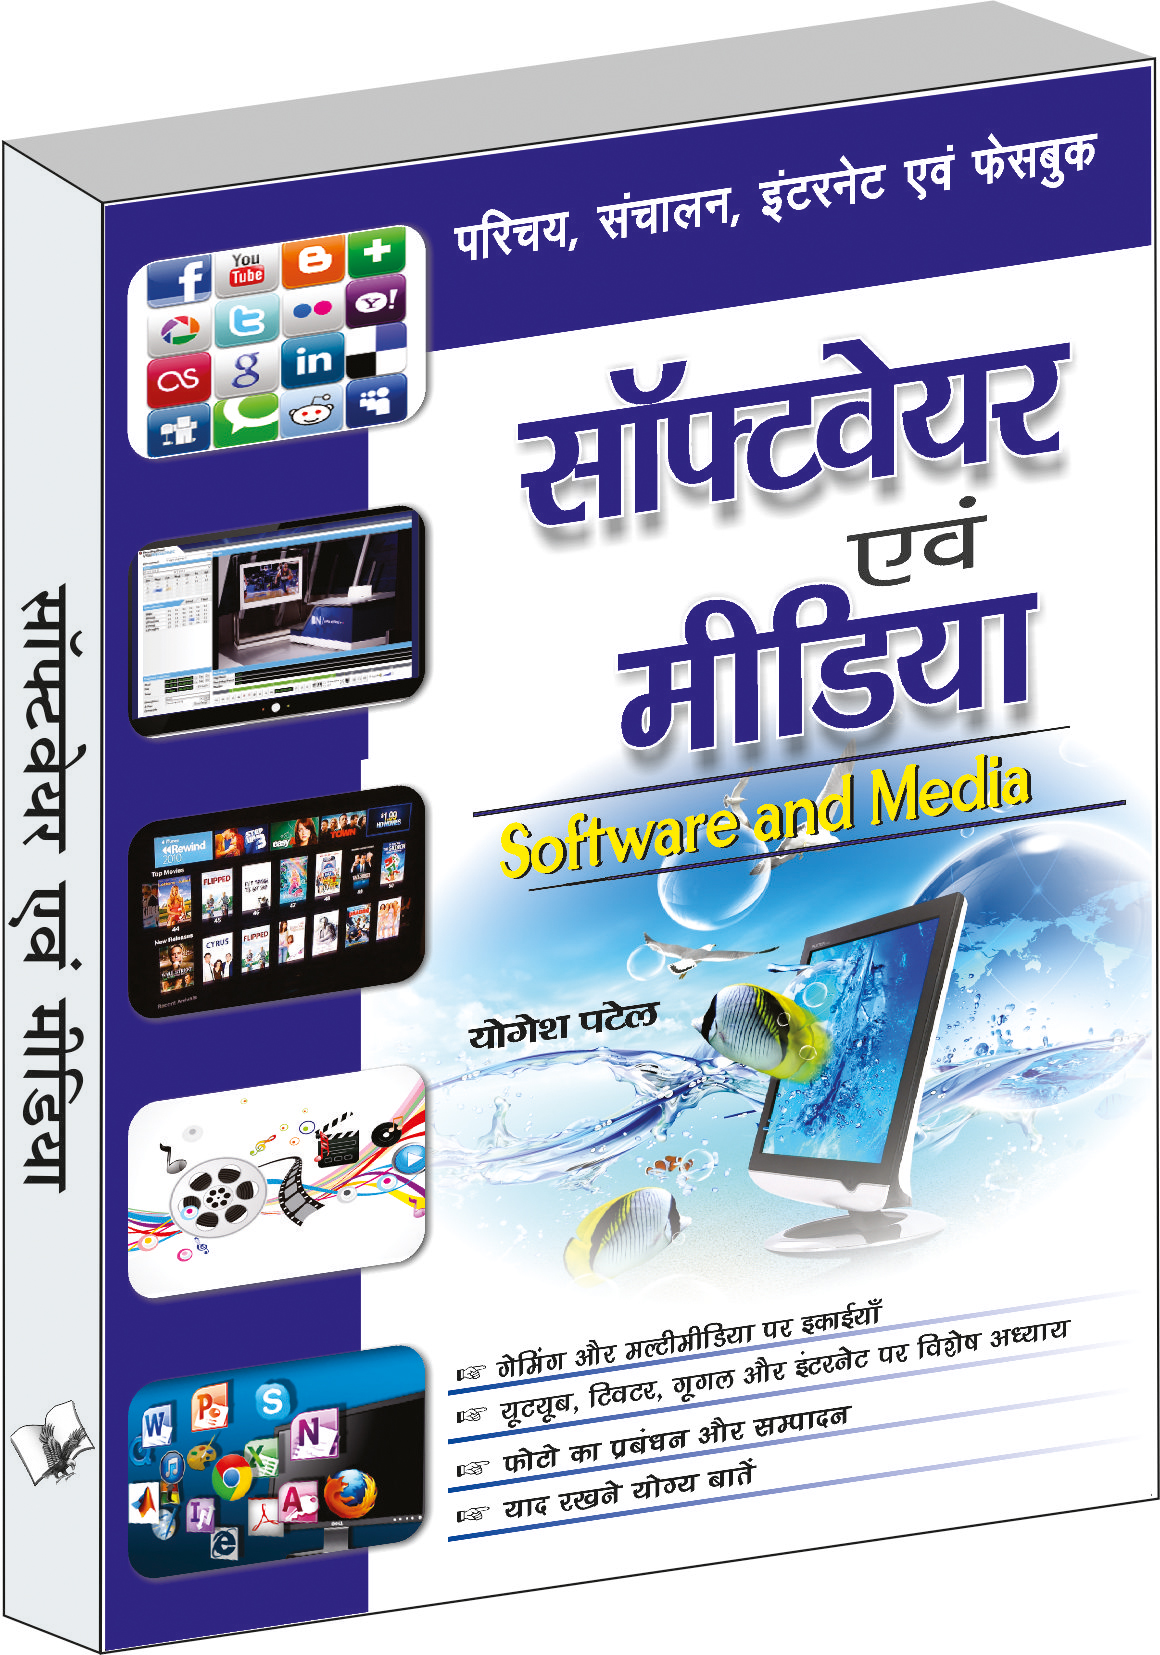 Software Evam Media-Parichay, Sanchalan, Internet Evam Facebook